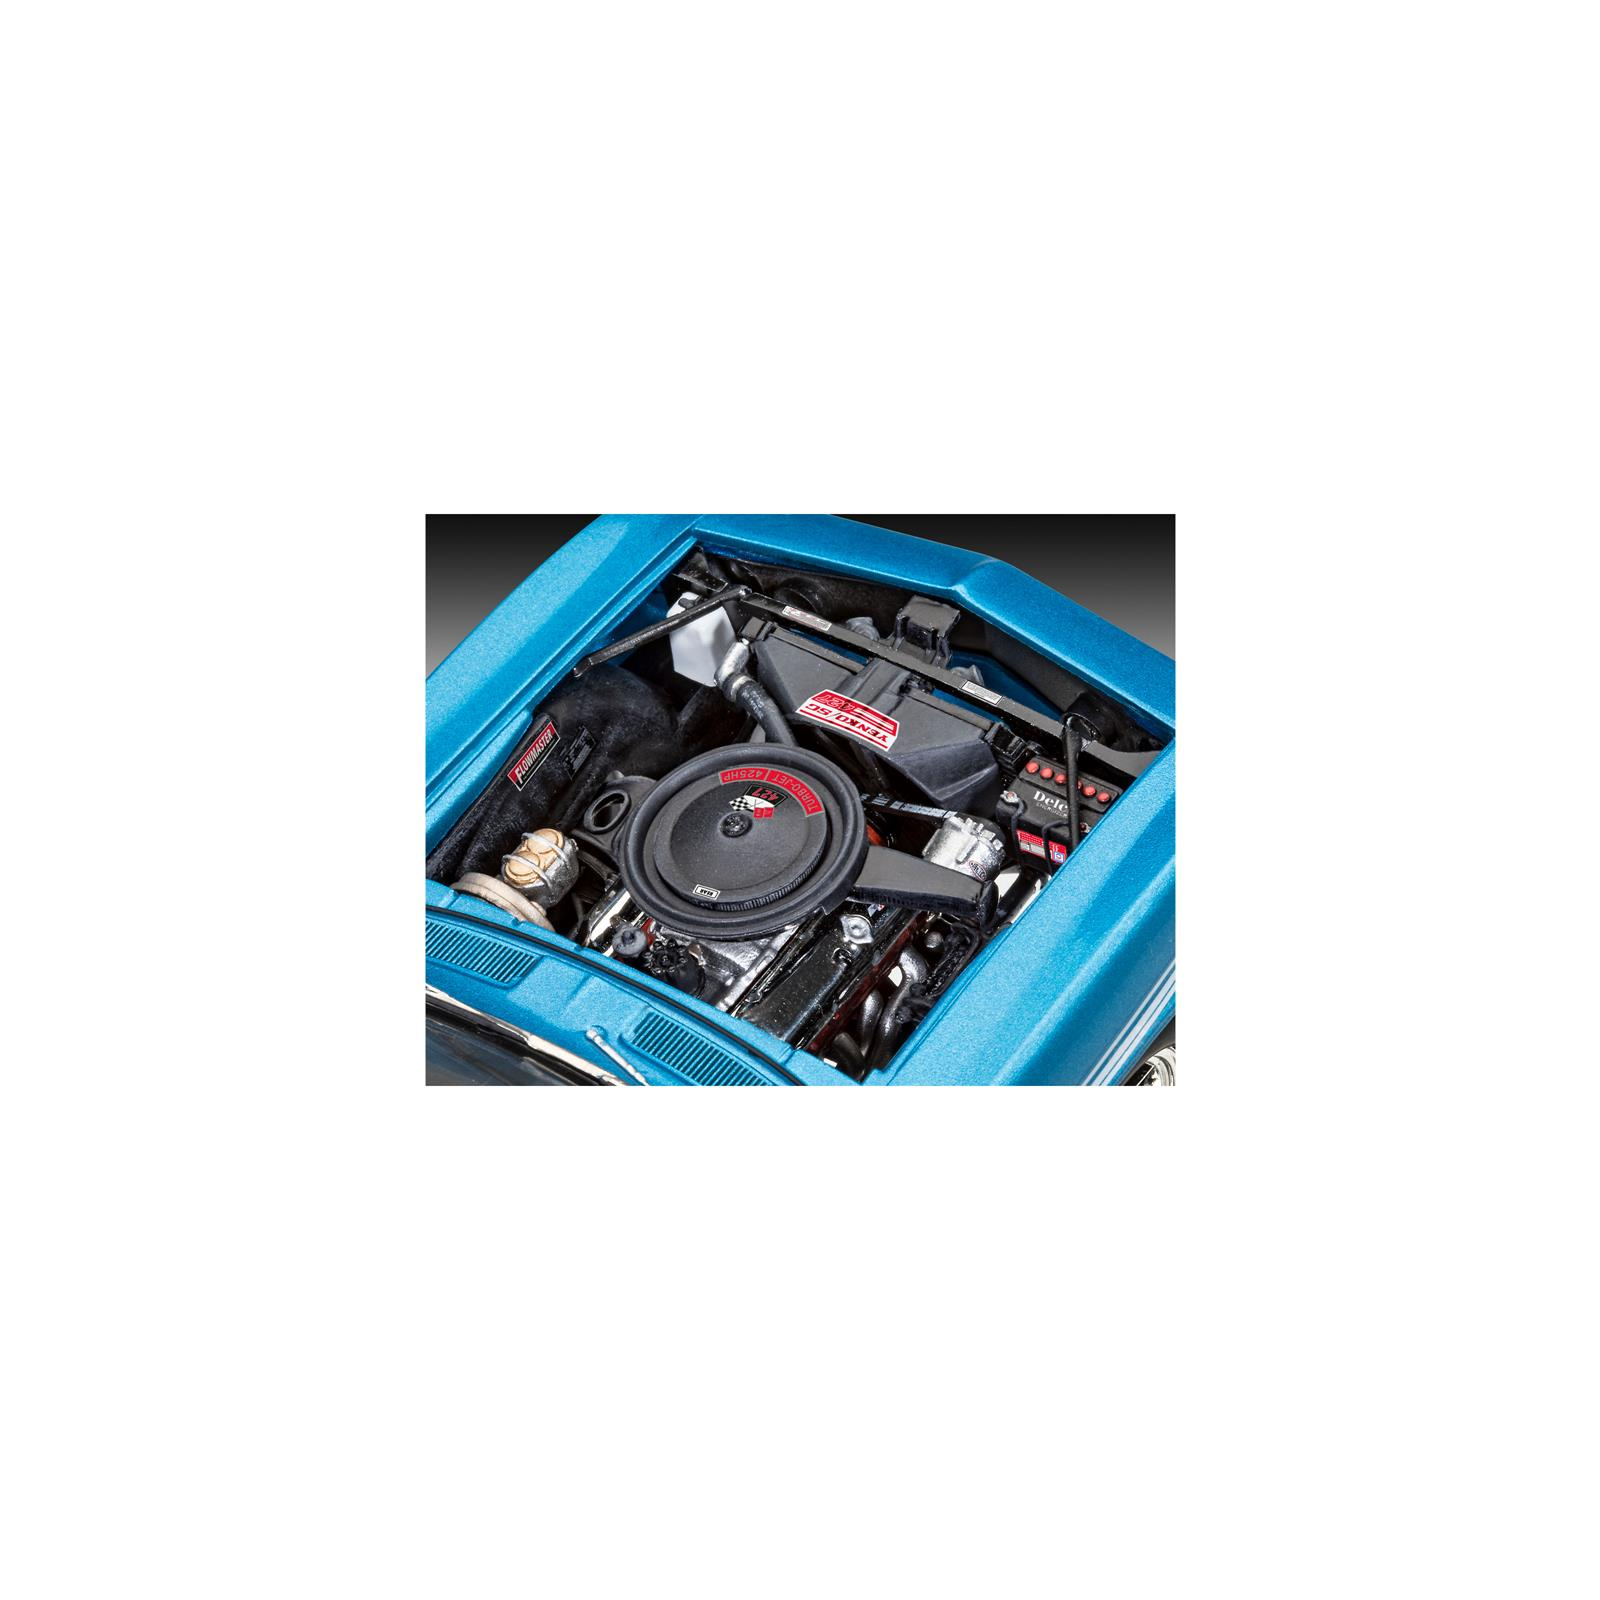 Збірна модель Revell Chevy Camaro Yenko 1969 з к/ф Форсаж рівень 5, 1:25 (RVL-07694) зображення 5